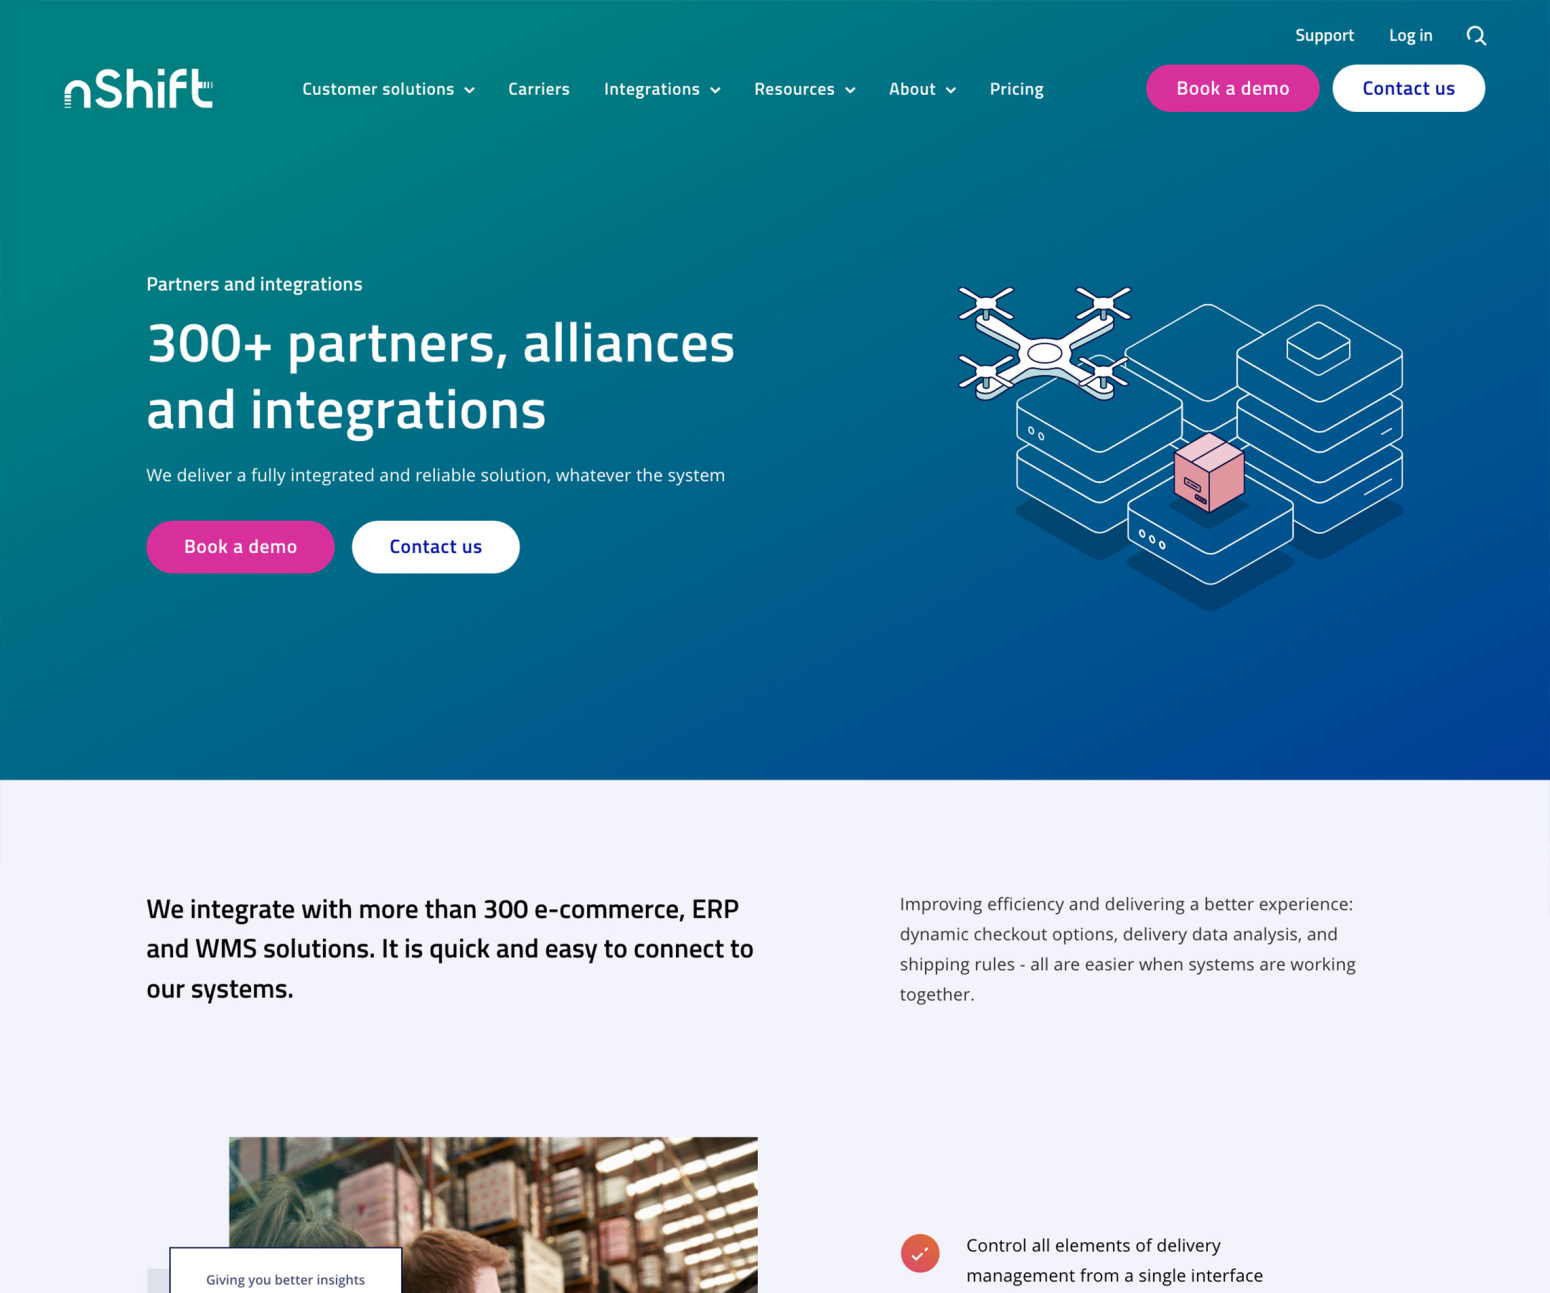 nShift website key benefits 2